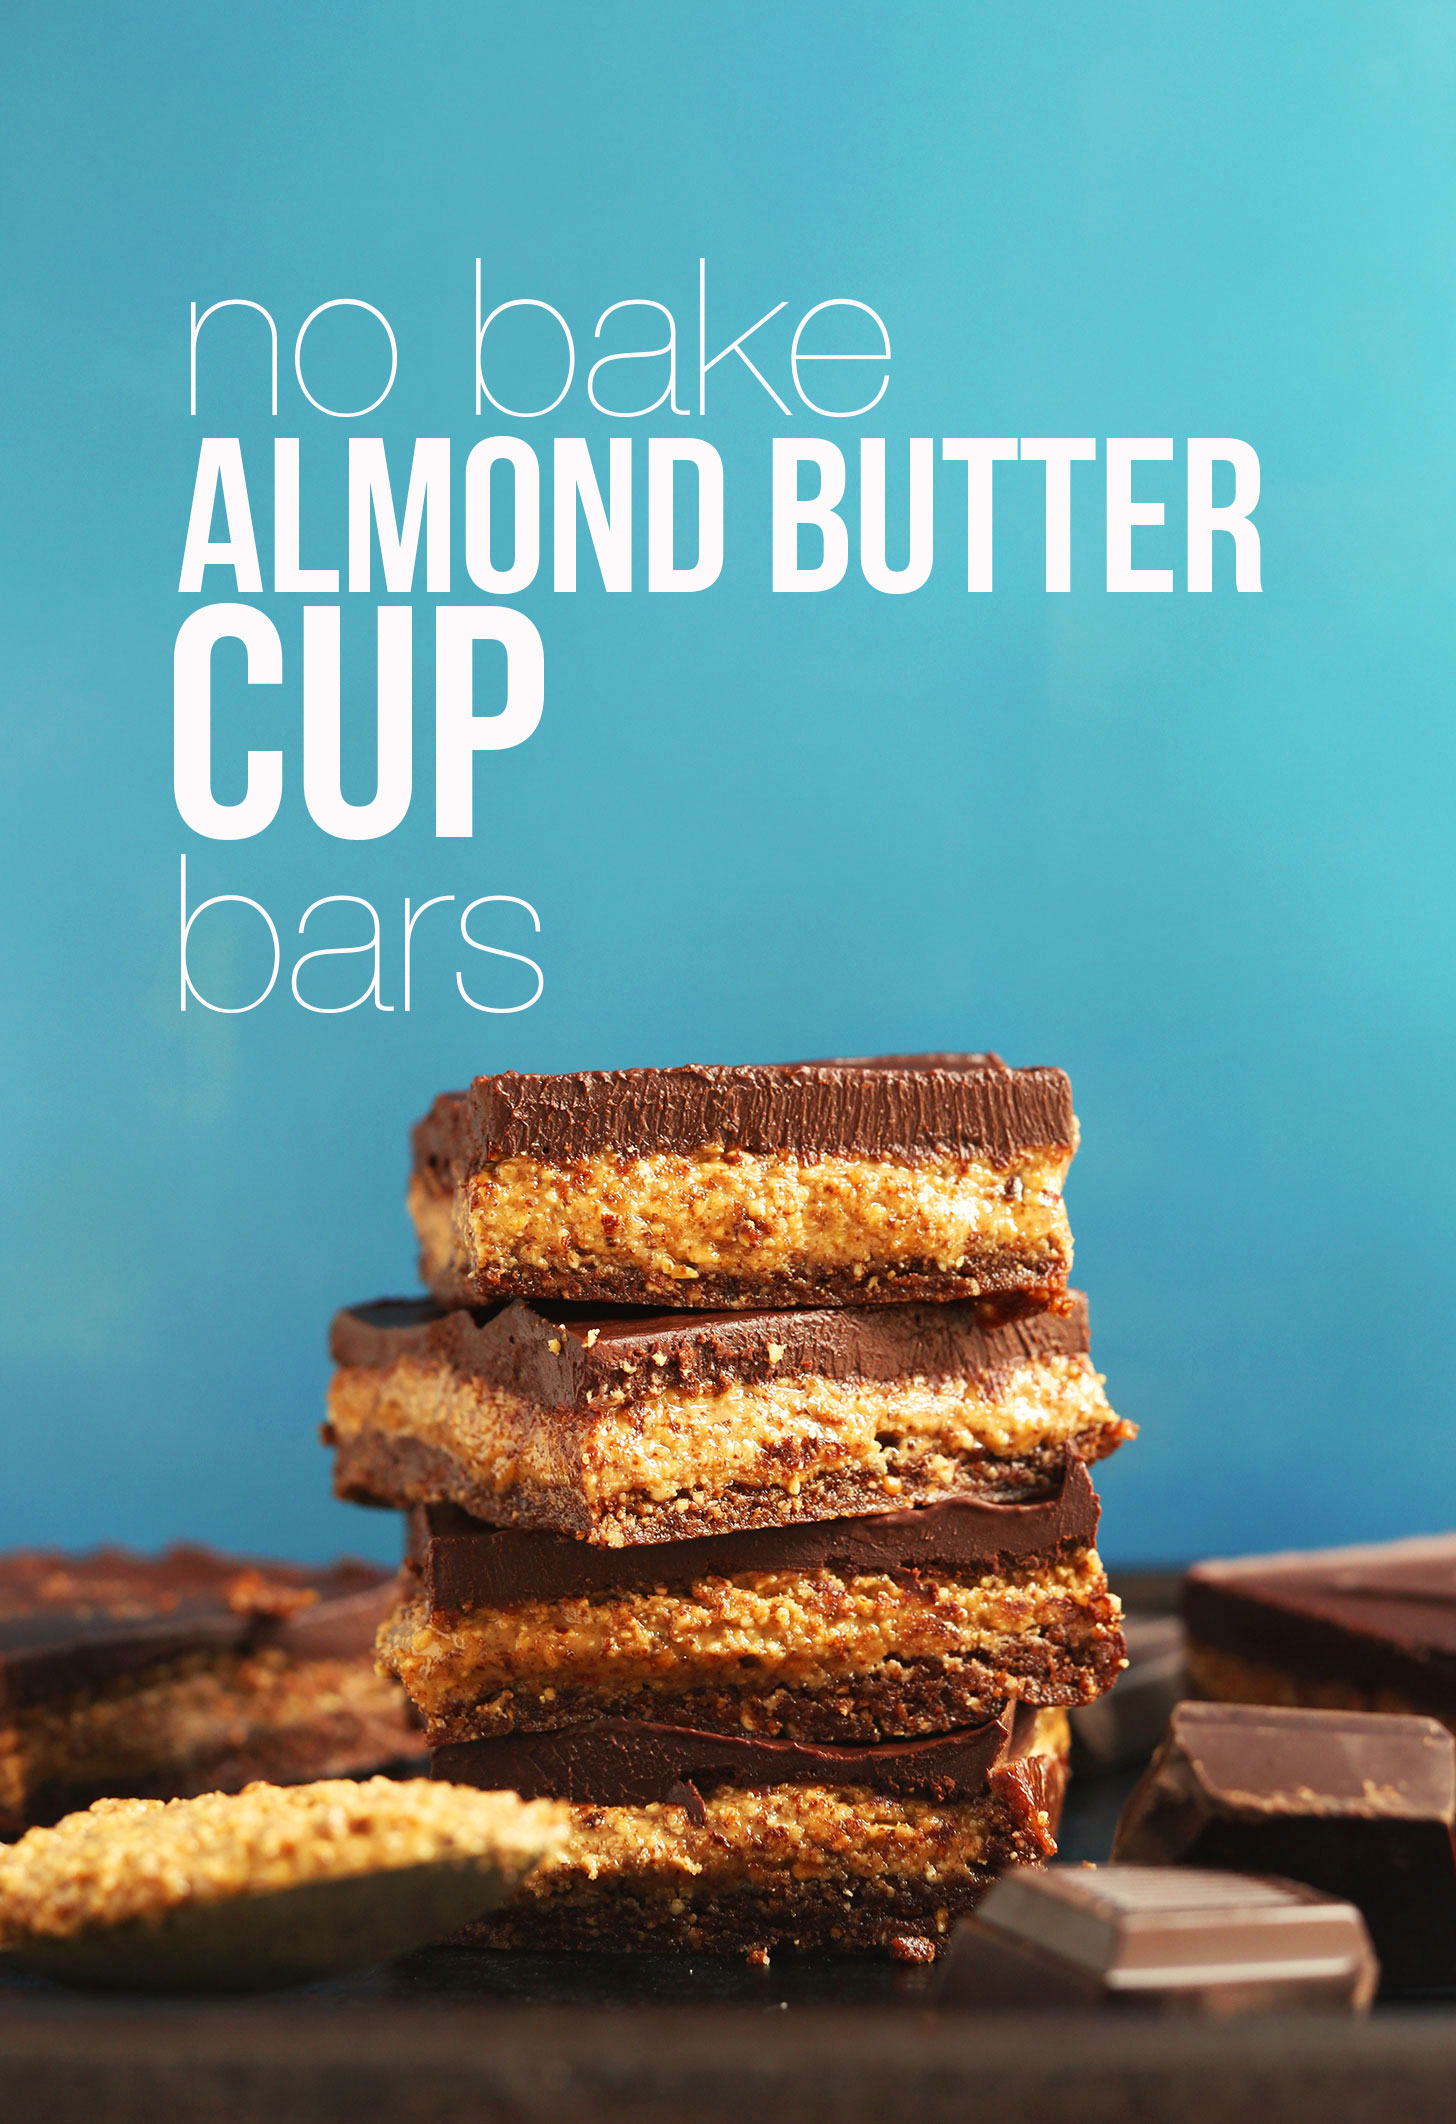 Amazing-creamy-fudgy-no-bake-almond-butter-cup-bars-in-20-minutes-vegan-glutenfree-chocolate-almondbutter-recipe